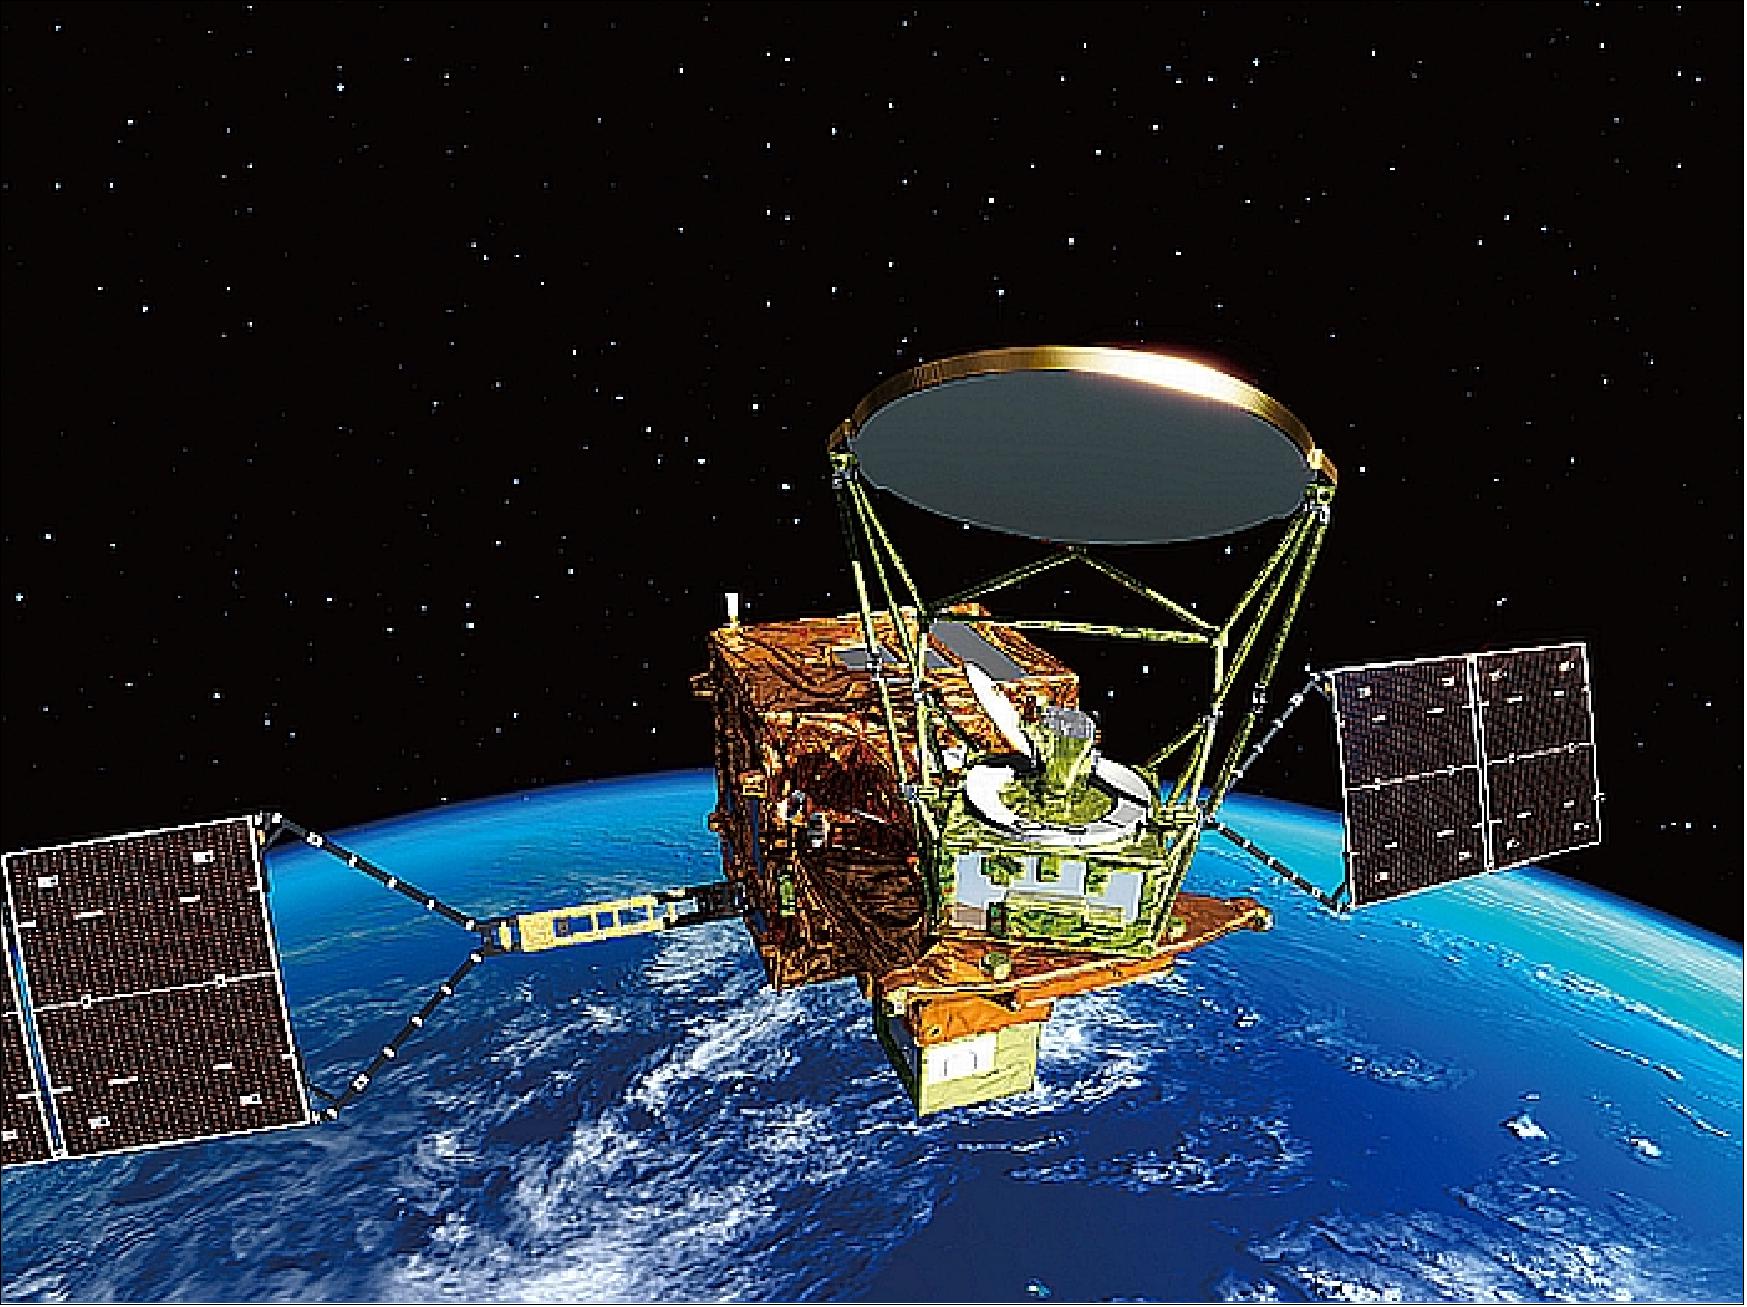 Figure 7: Alternate view of the GCOM-W1 spacecraft in orbit (image credit: JAXA, Ref. 10) 29)